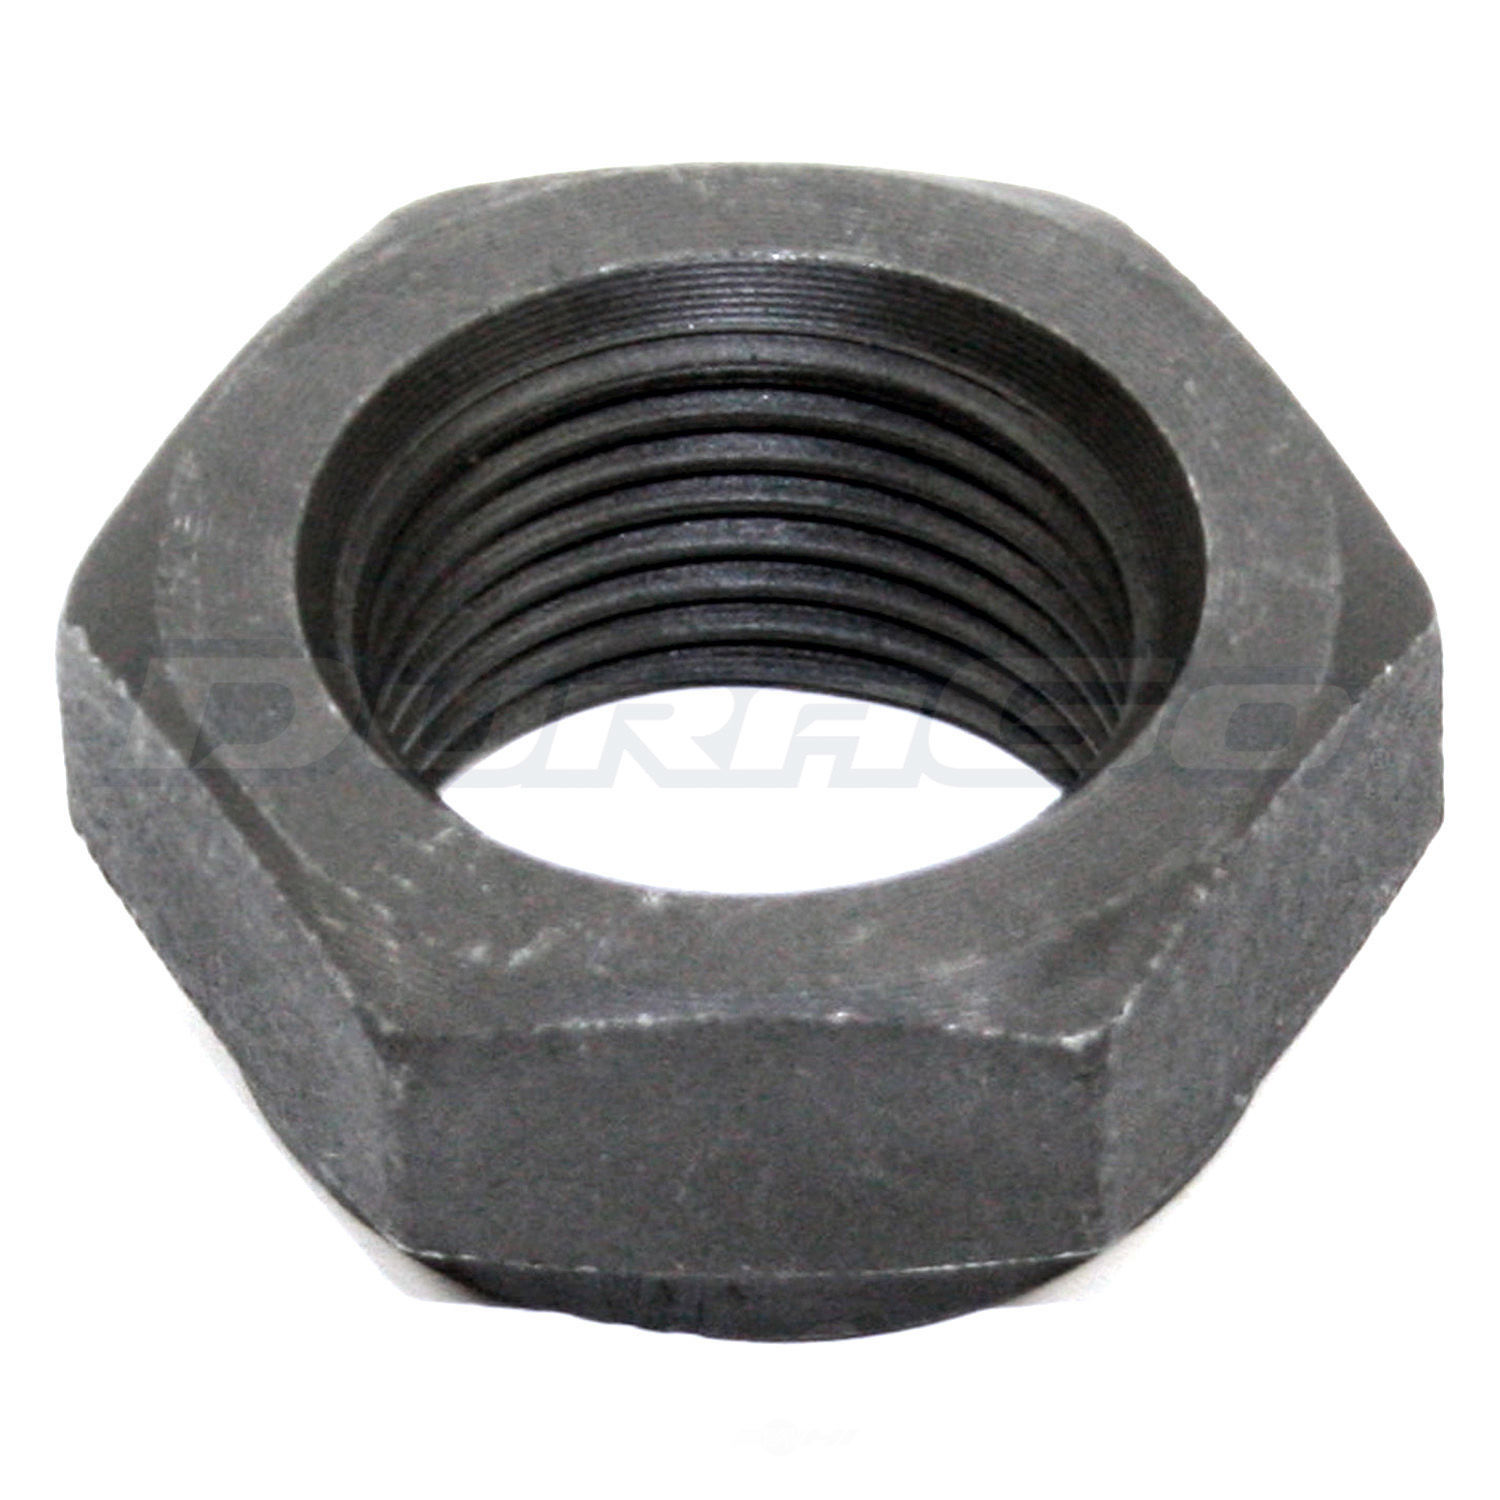 DURAGO - Axle Nut (Front) - D48 295-99029